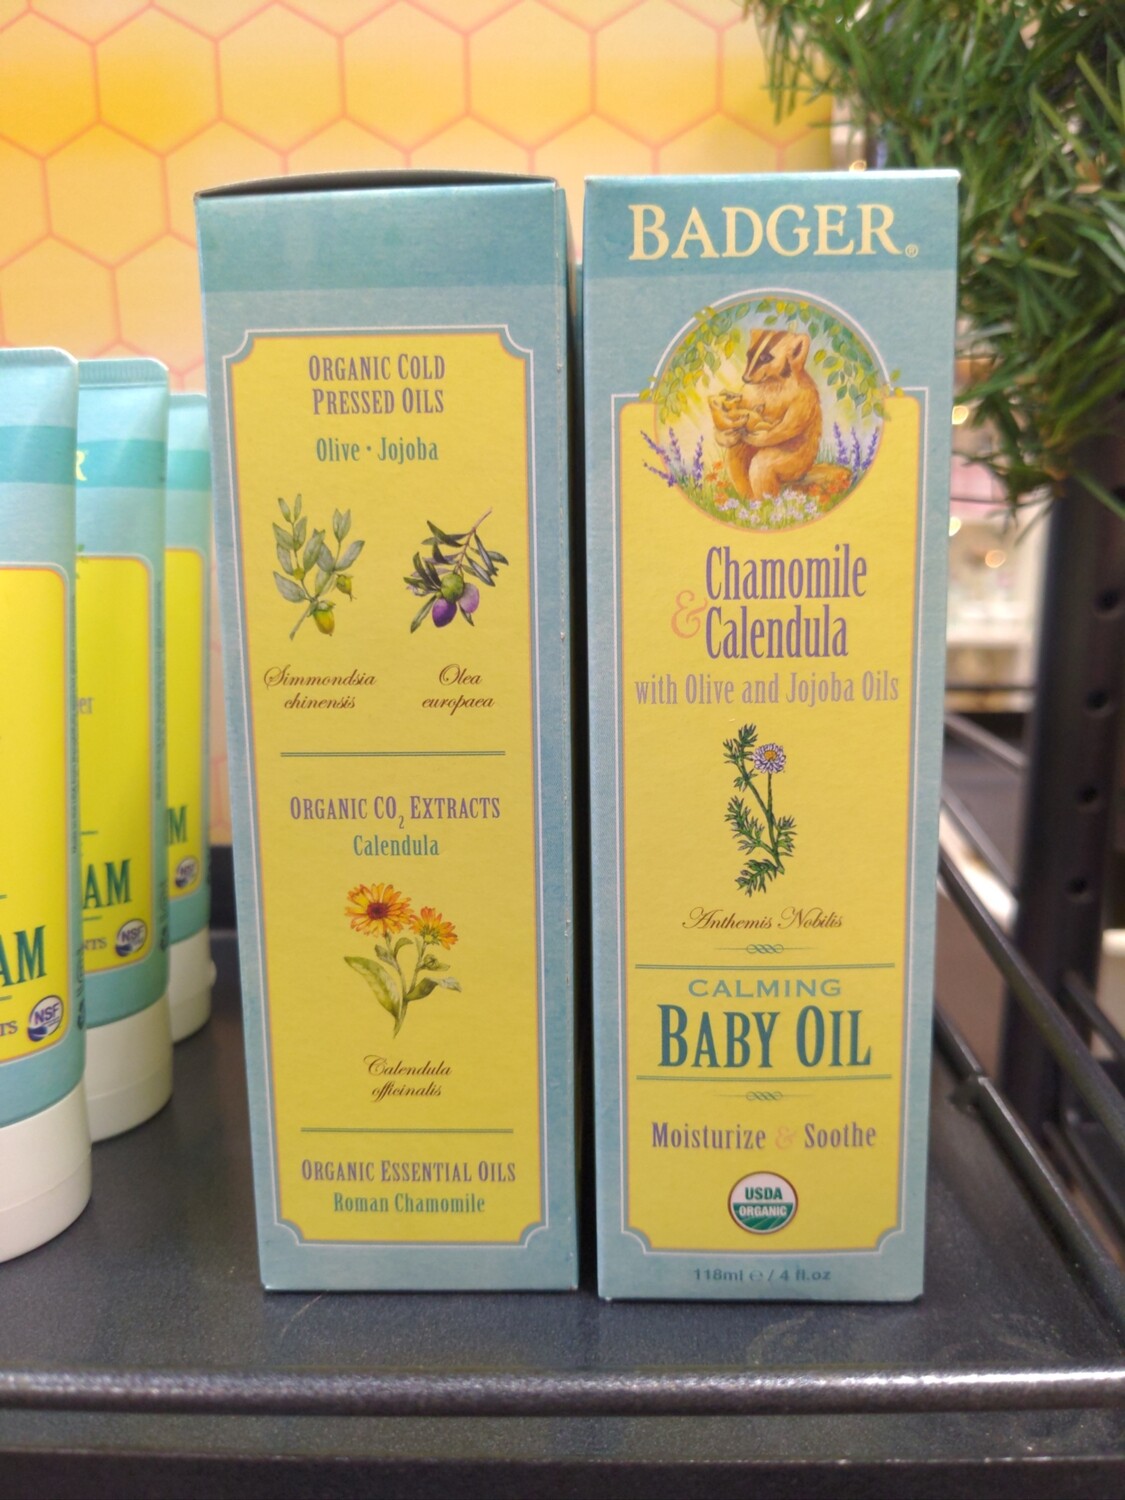 Badger Chamomile and Calendula Baby Oil 4 oz